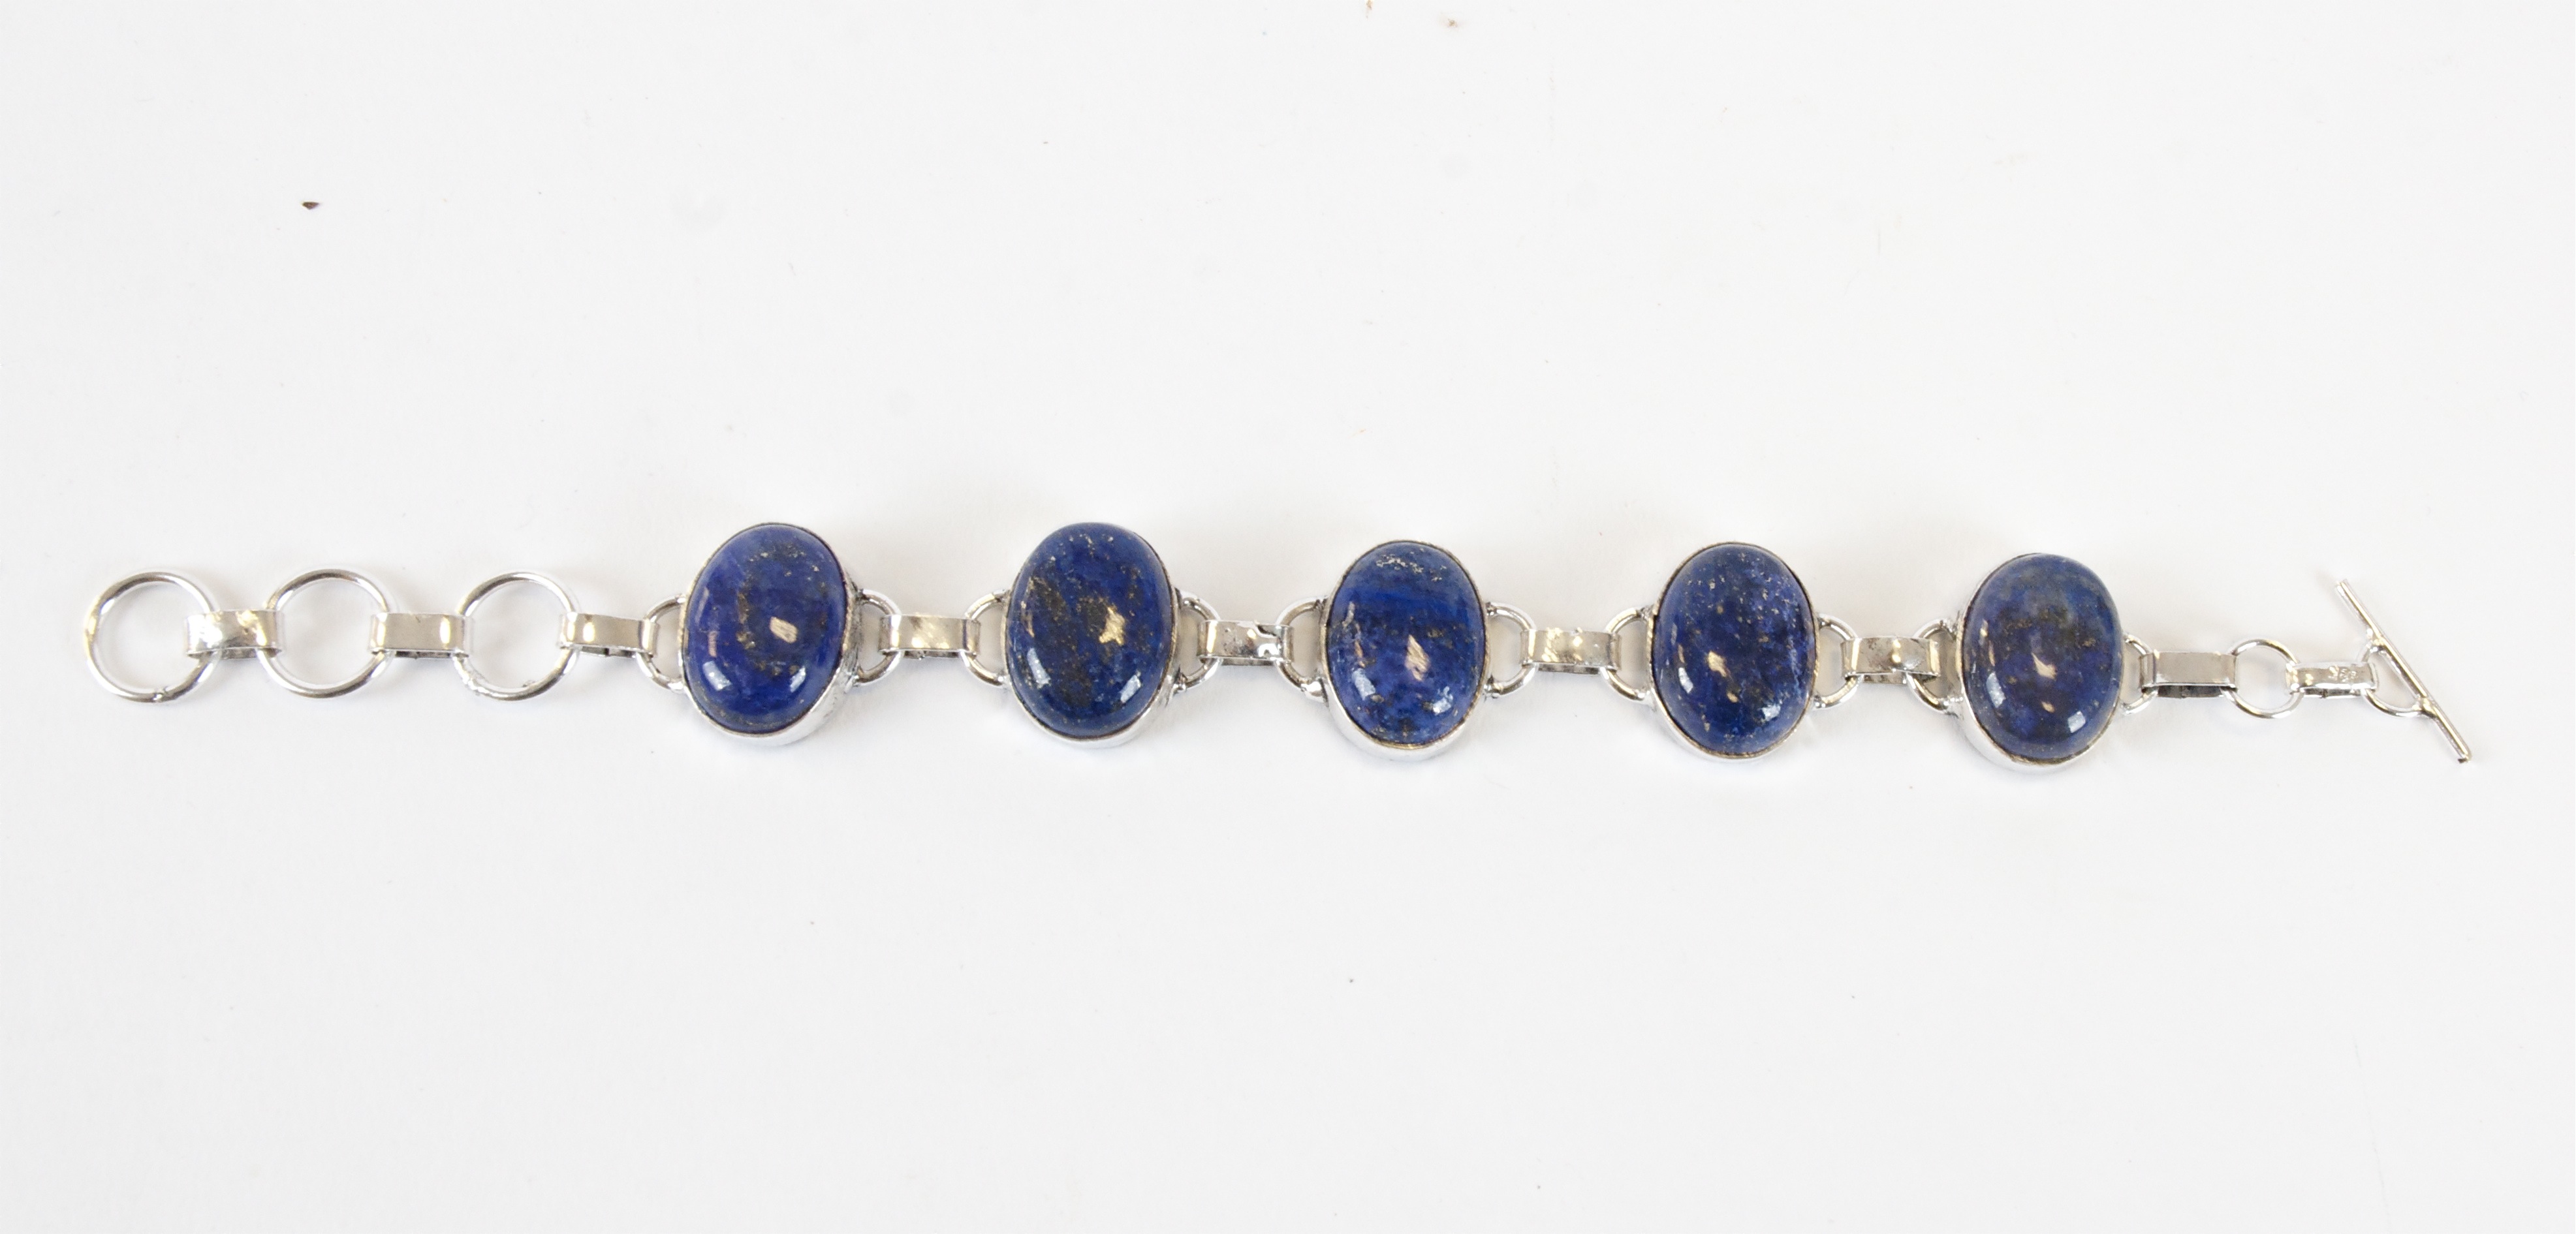 A 925 silver lapis lazuli bracelet, with five oval cabochon panels